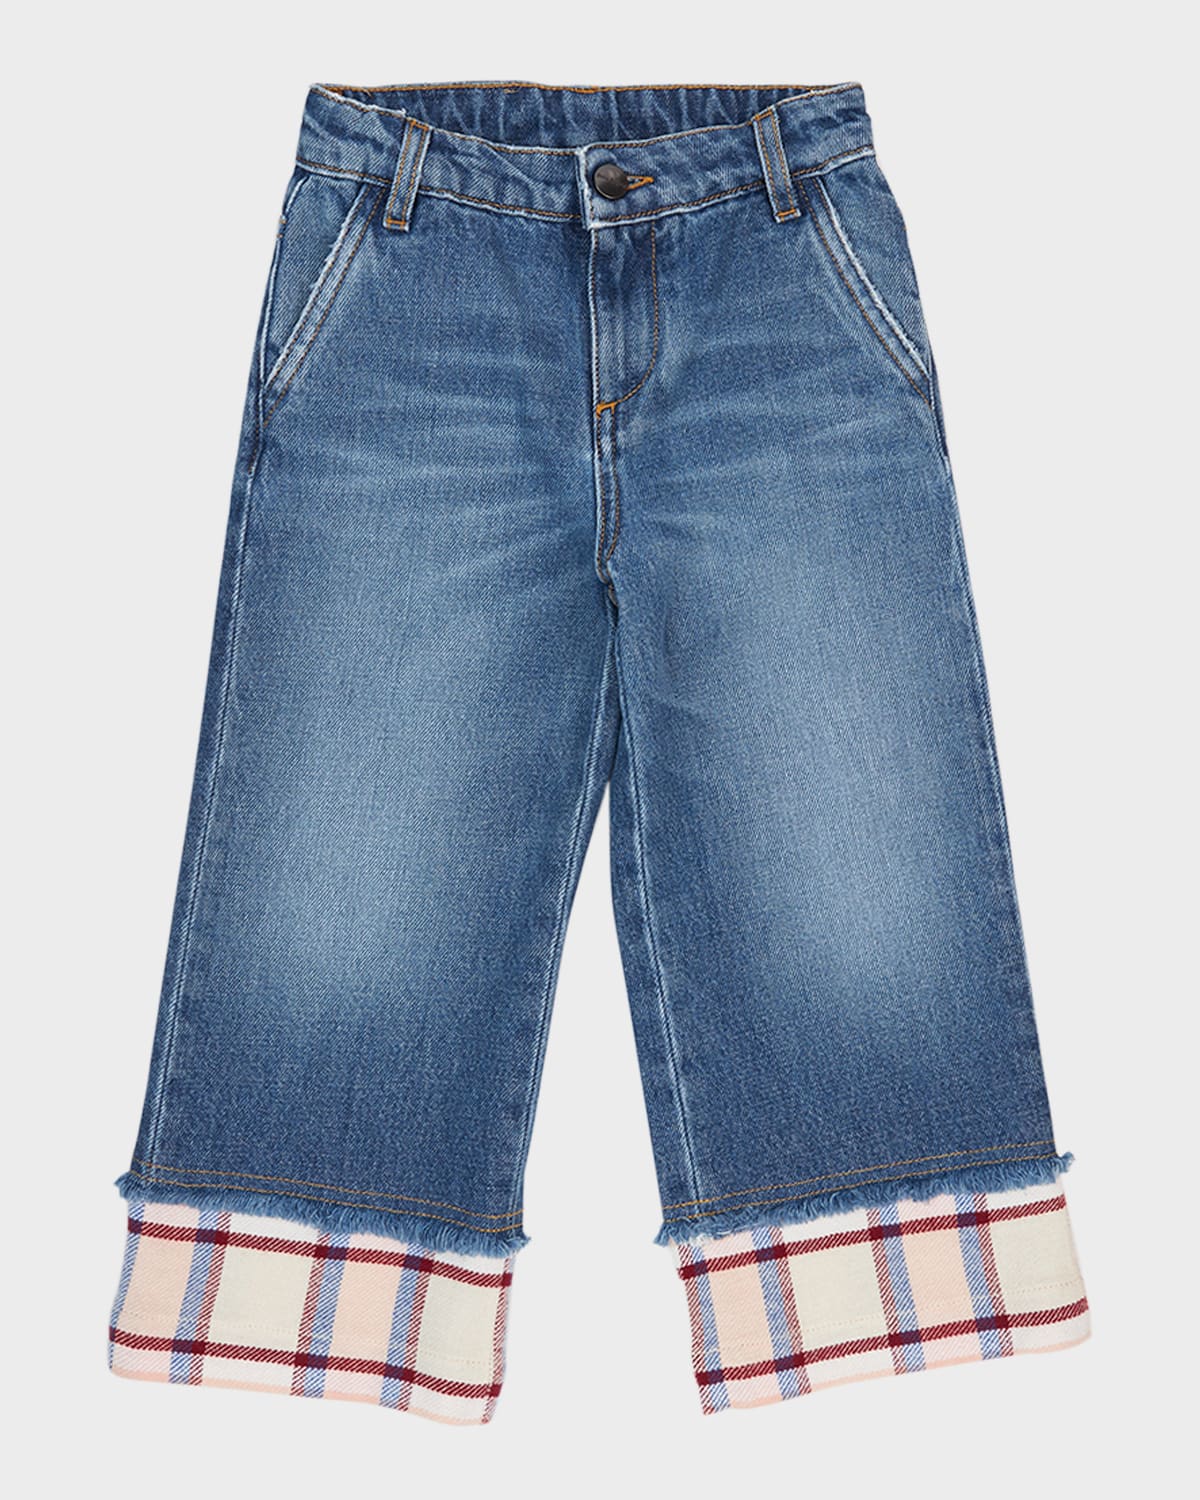 Girl's Check-Print Trim Medium Wash Jeans, Size 4-12